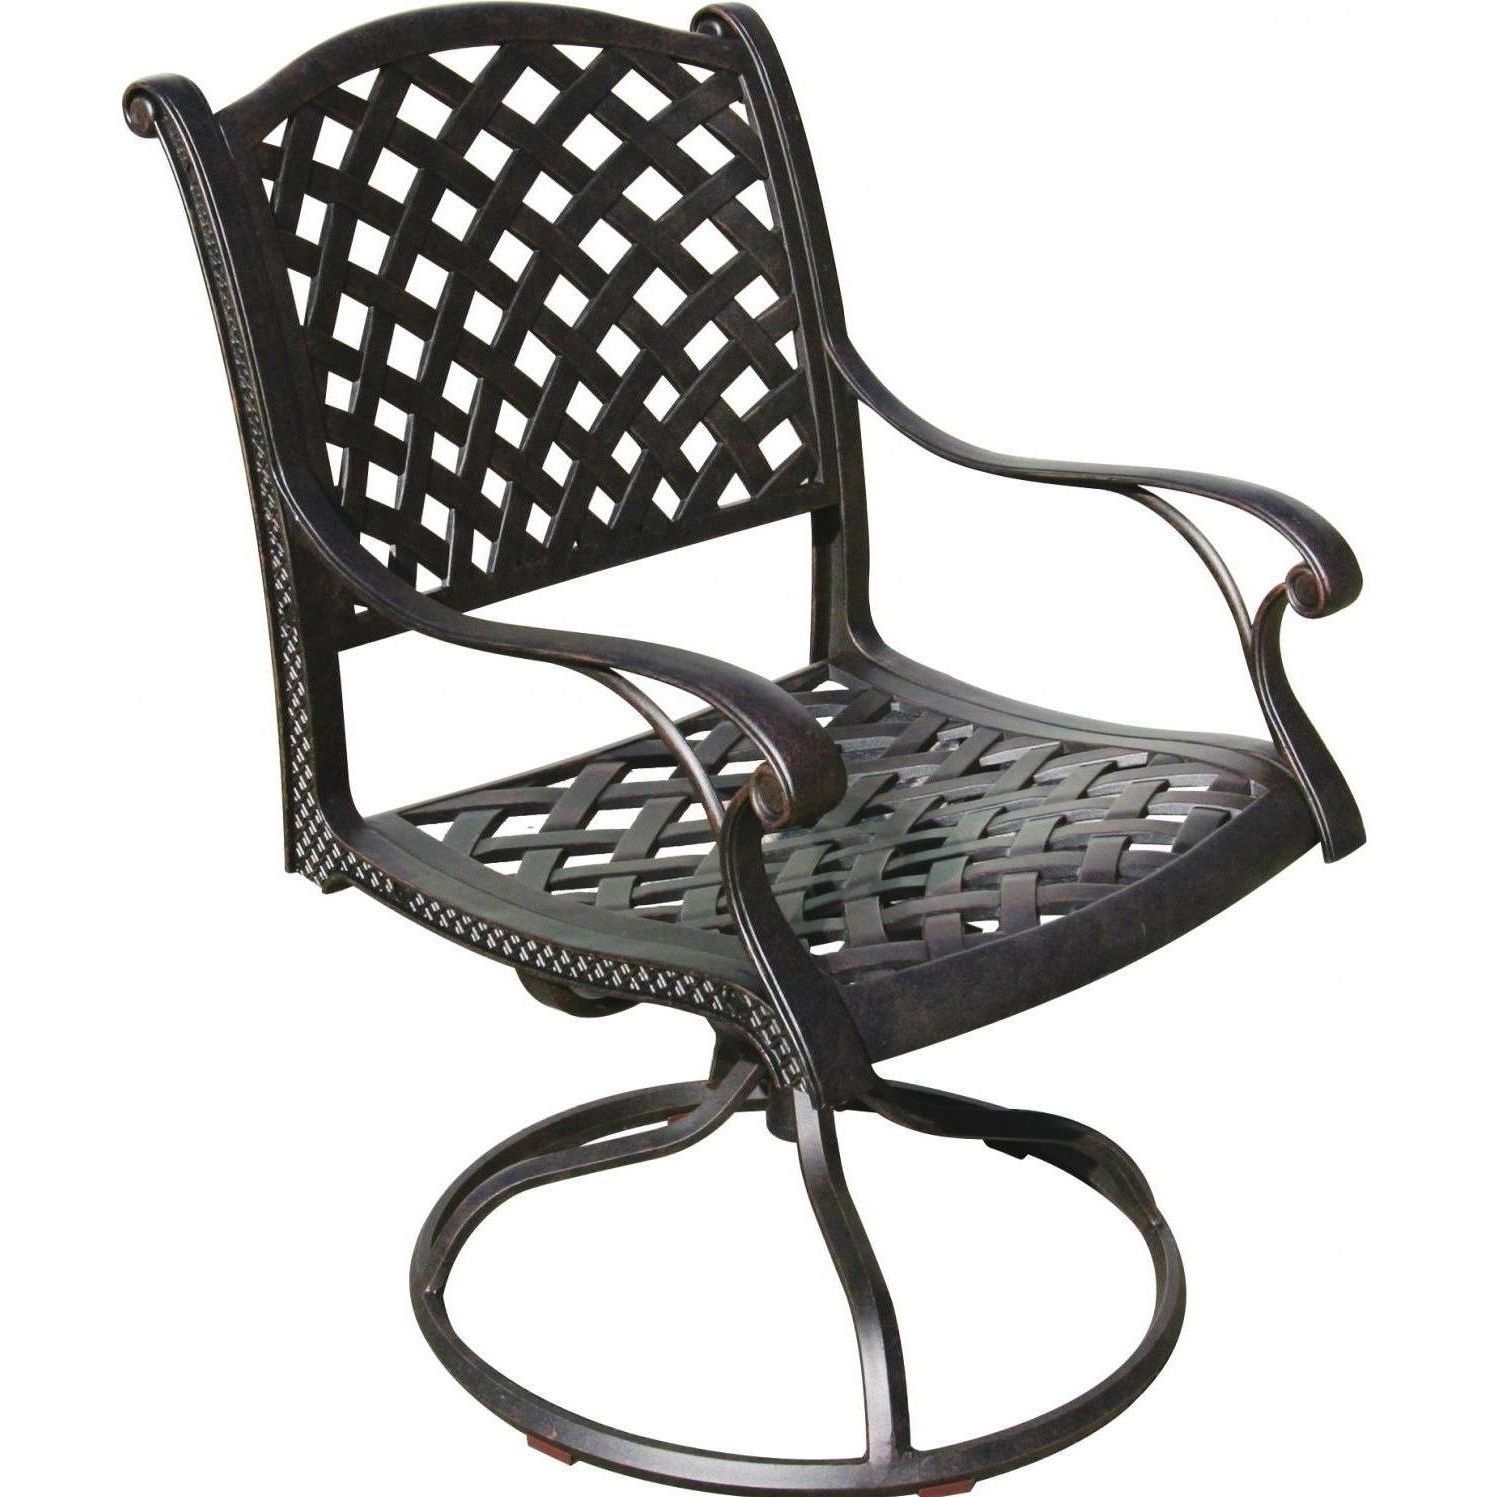 Darlee Nassau Cast Aluminum Patio Swivel Rocker Dining Chair Regarding Latest Aluminum Patio Rocking Chairs (View 4 of 15)